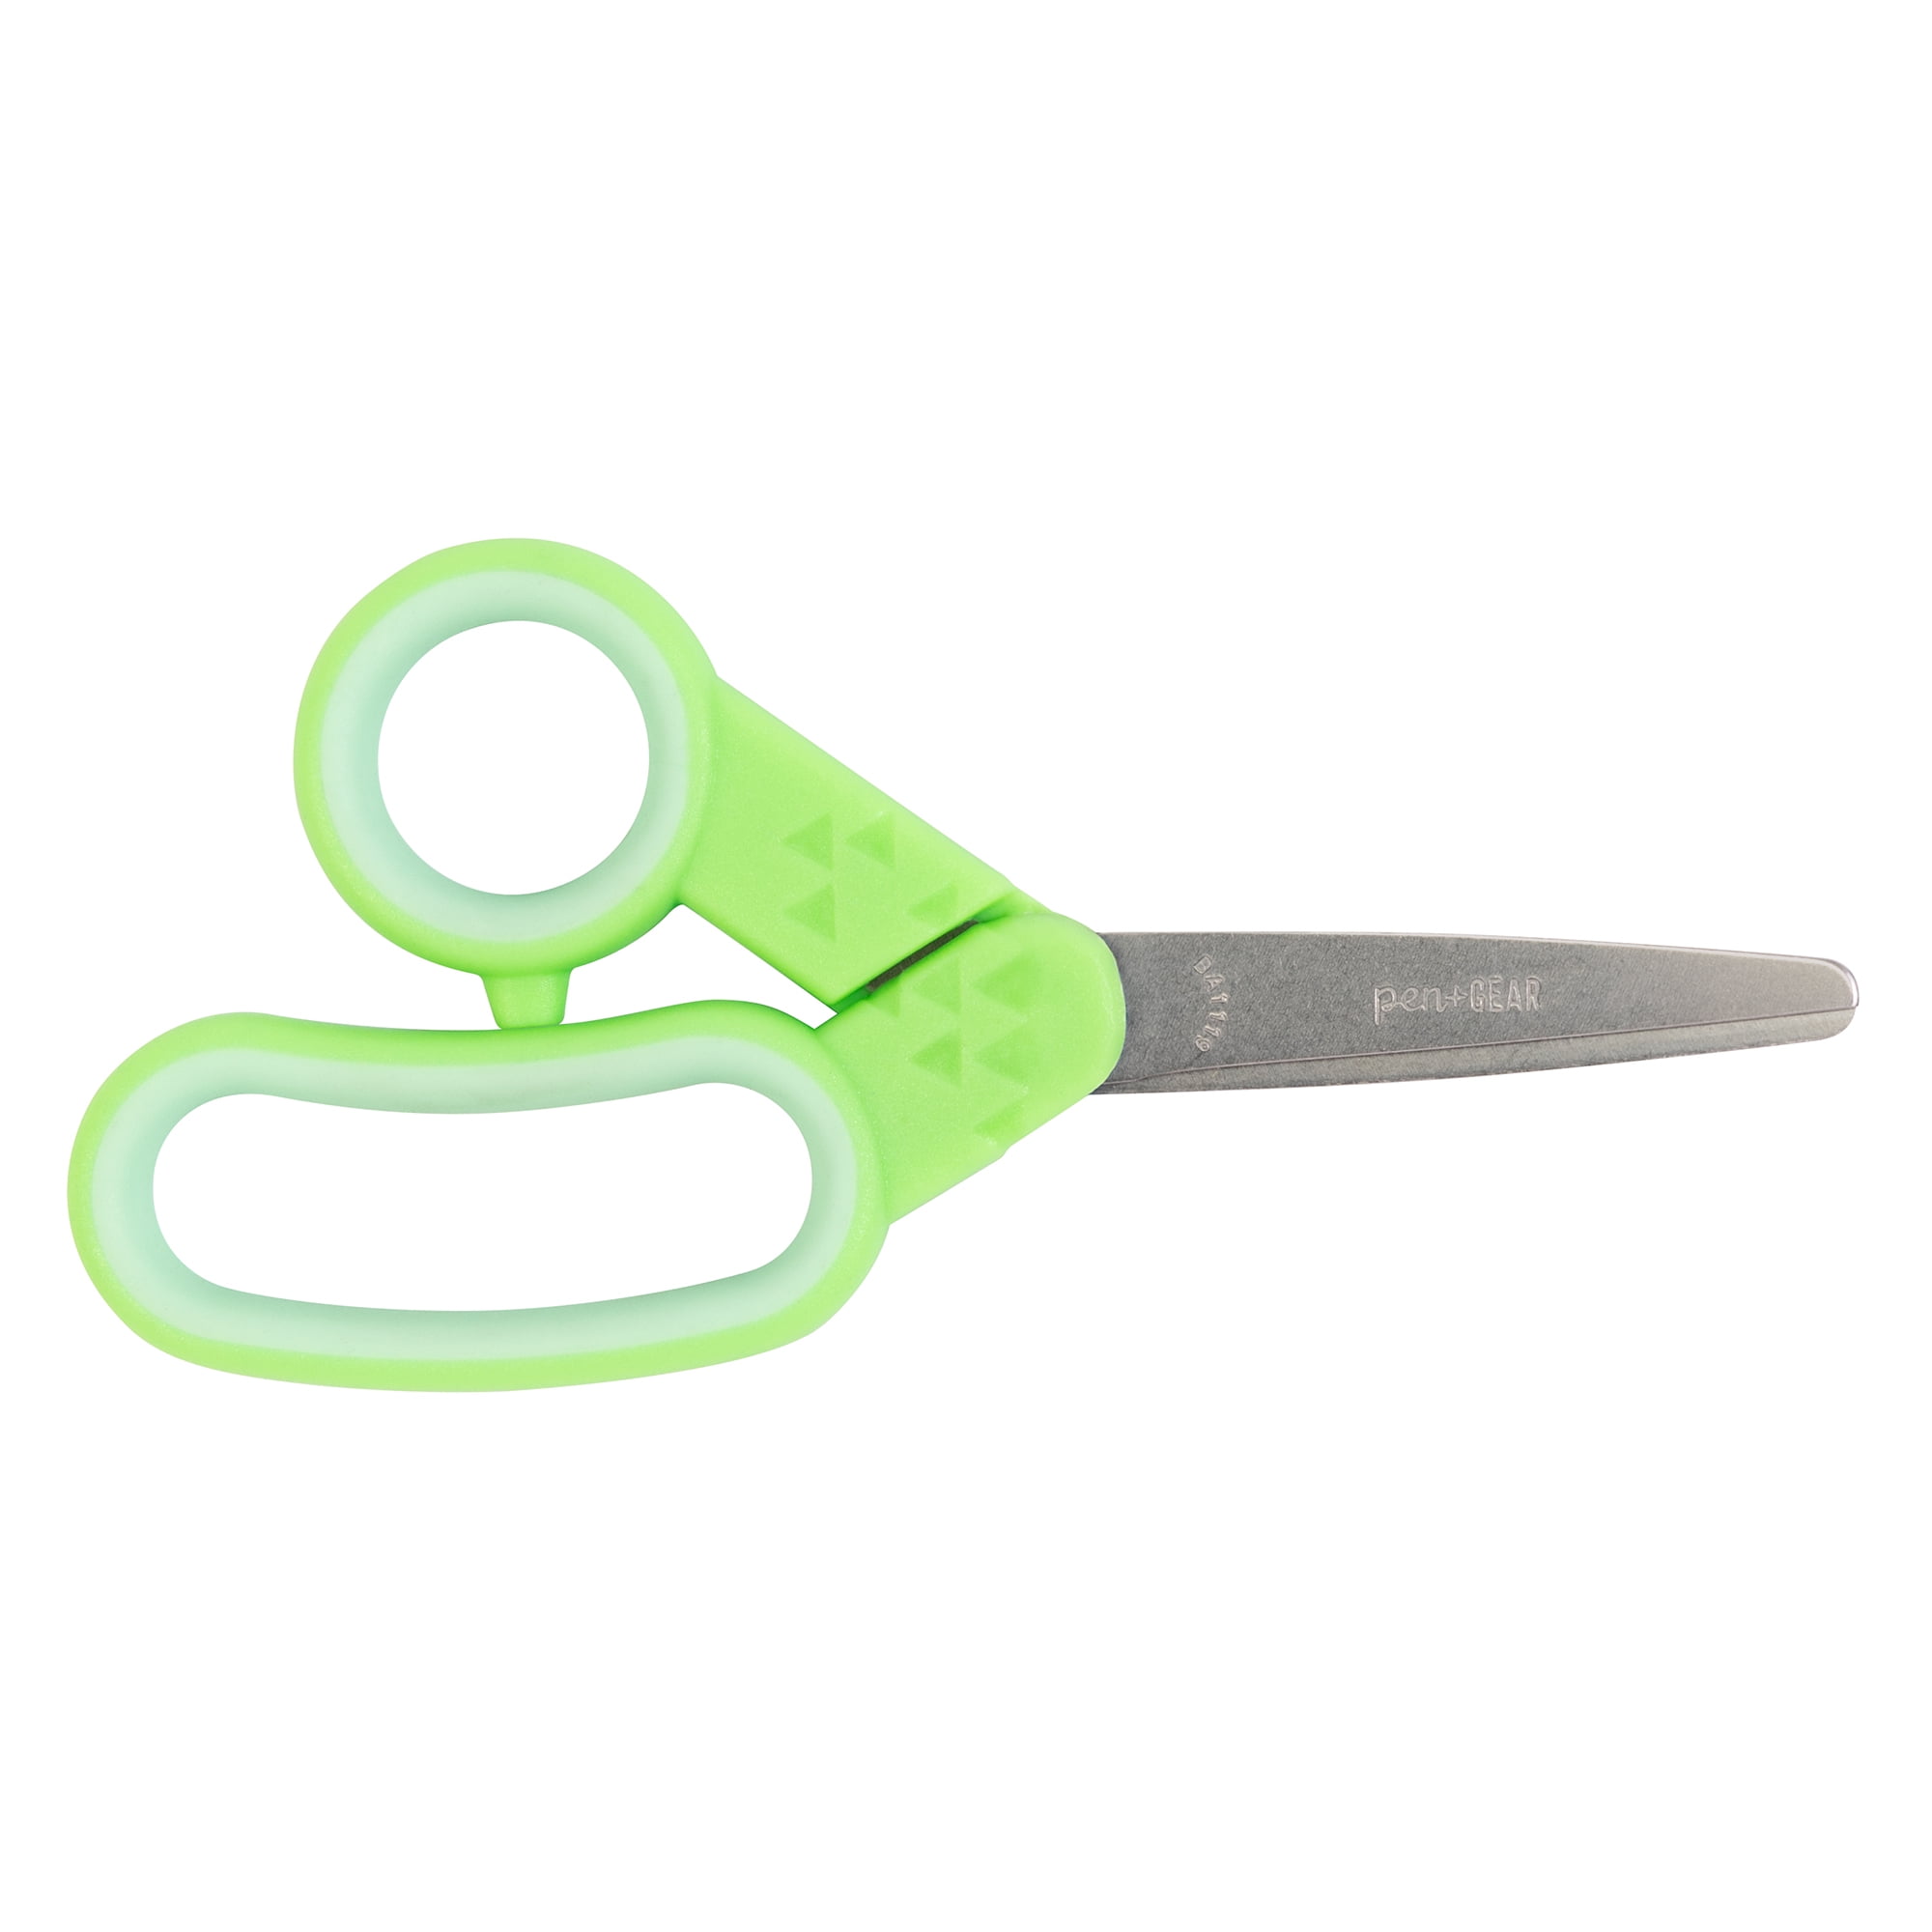 Pen and Gear Kids Scissors, 5, Blunt, School Supplies for Kids 5+, Light  Blue/Green, Pack of 2 